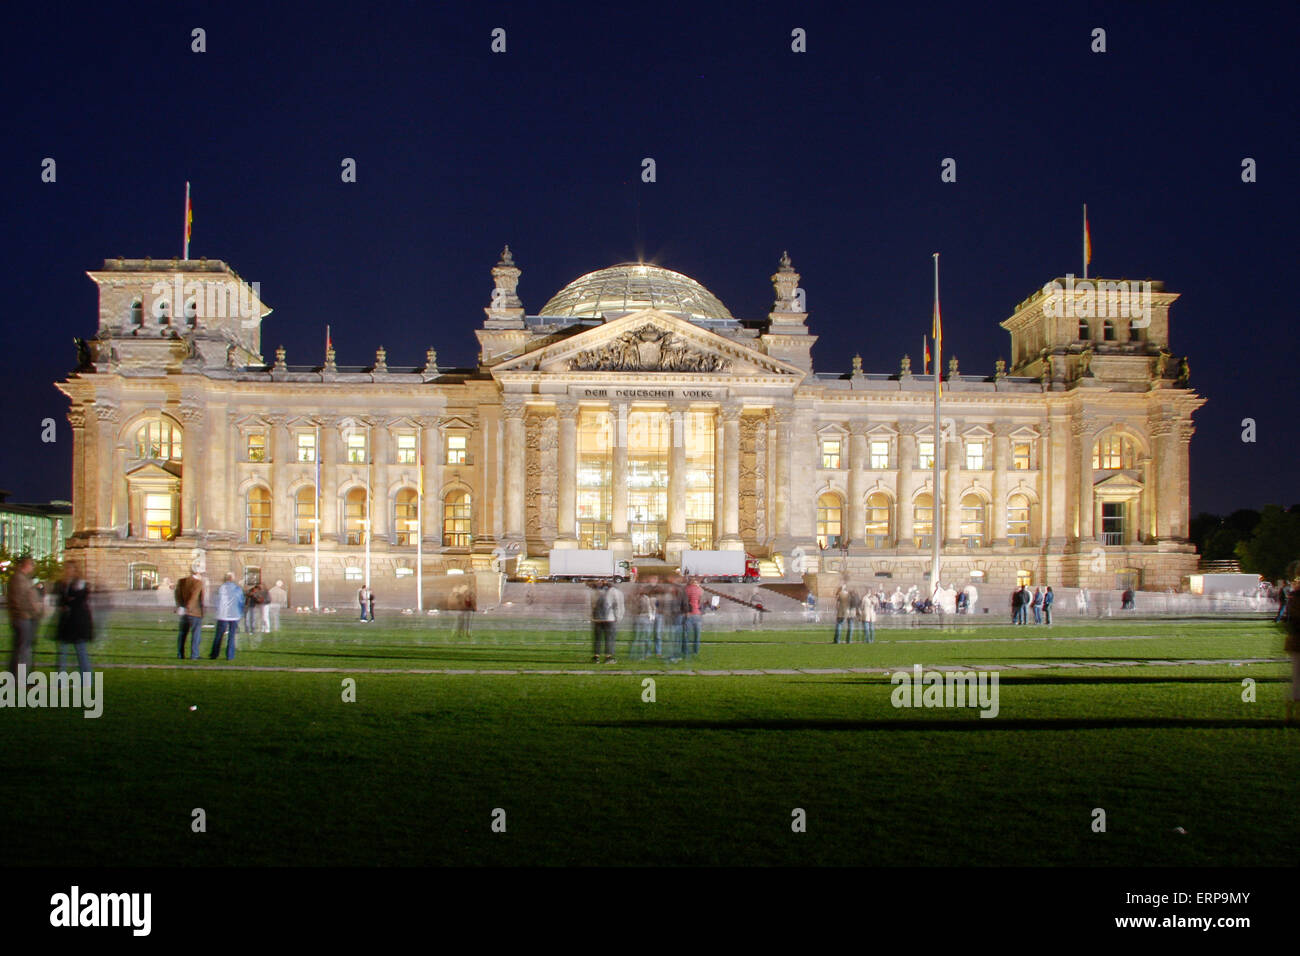 Mai 2009 - BERLIN: die Reichstags Gebäude in Berlin. Stockfoto